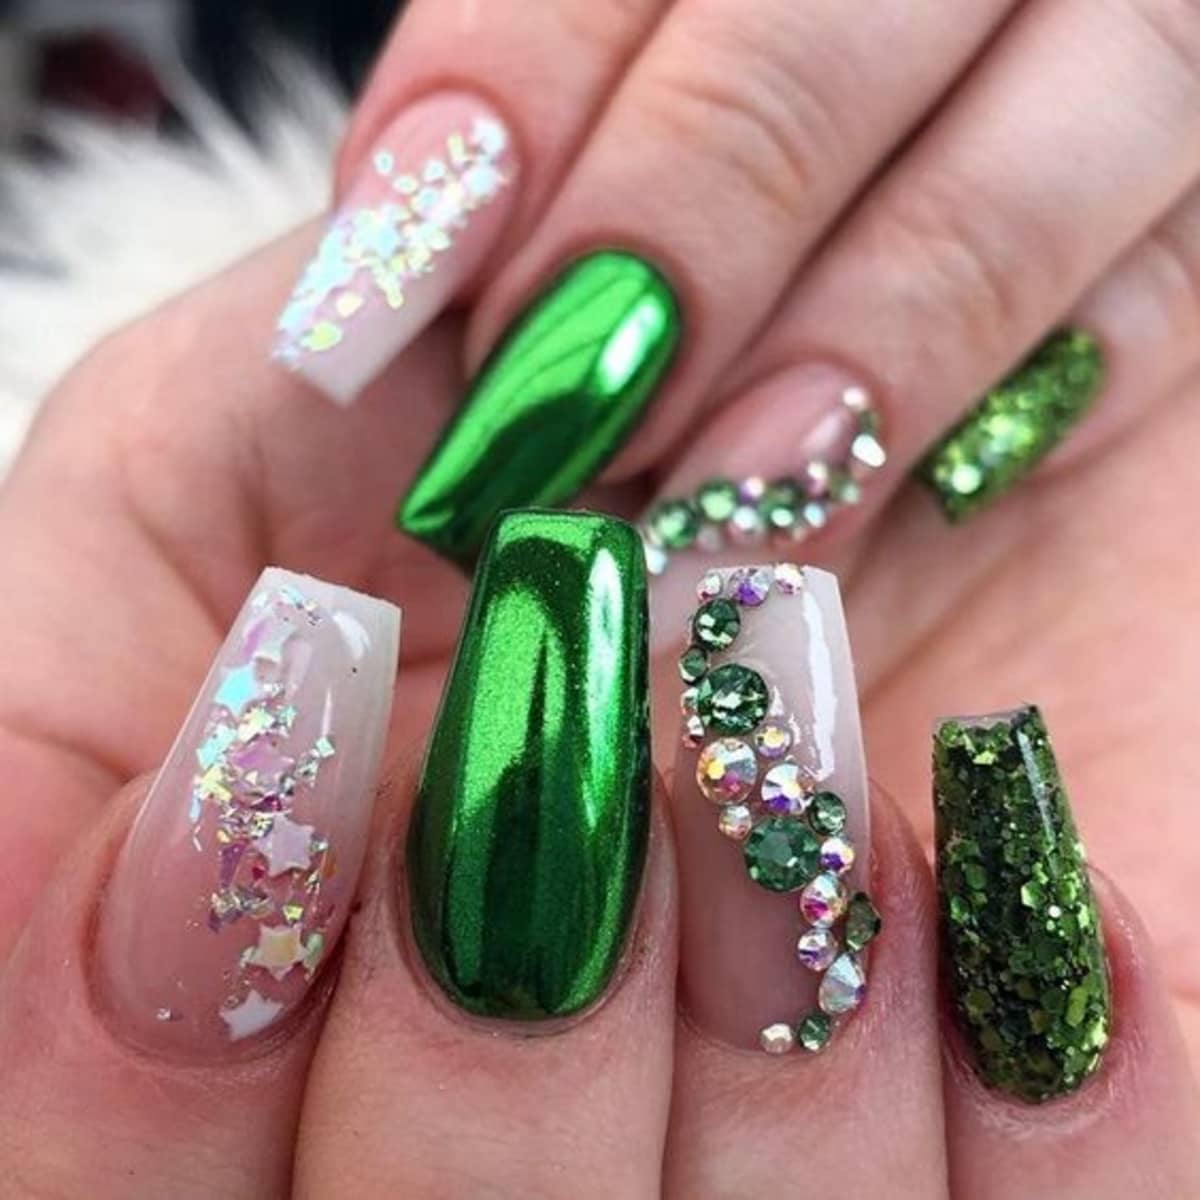 Top Nails - Green nails with Christmas flower nail art. #topnails  #dippowder #snsnails #notpolish #noacrylic #ombrenails #dippingpowder |  Facebook